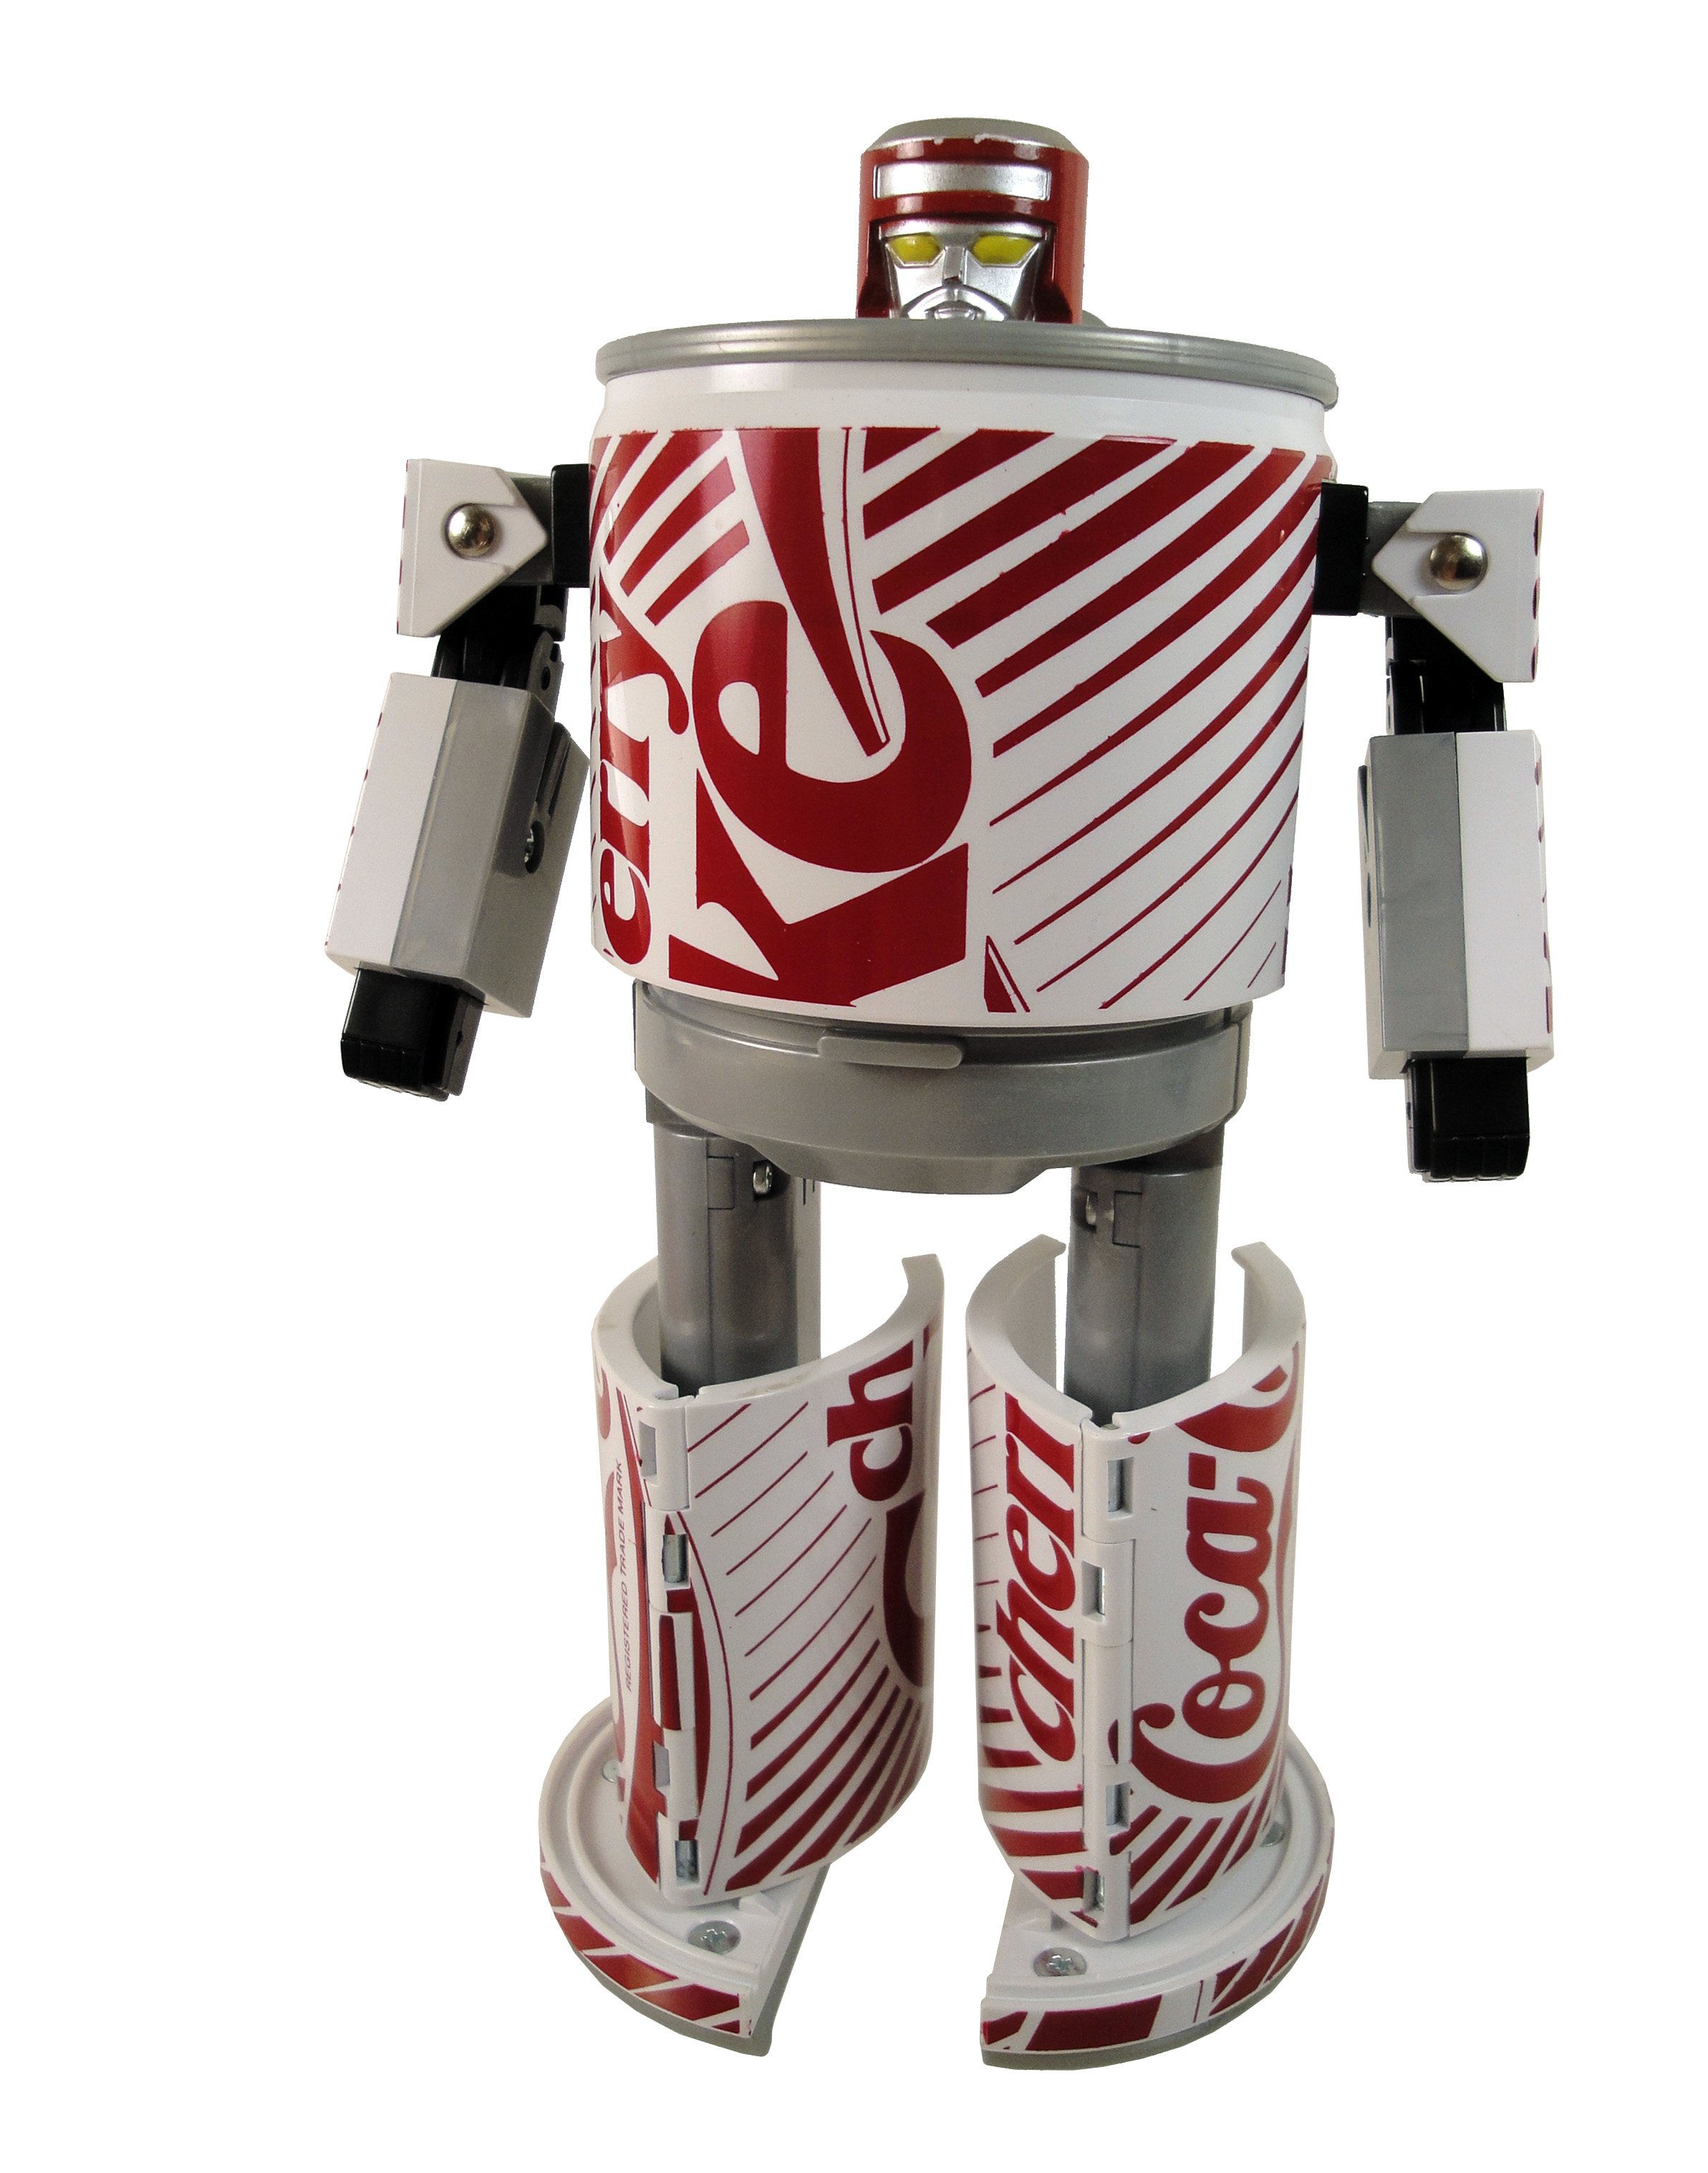 gobot coke can